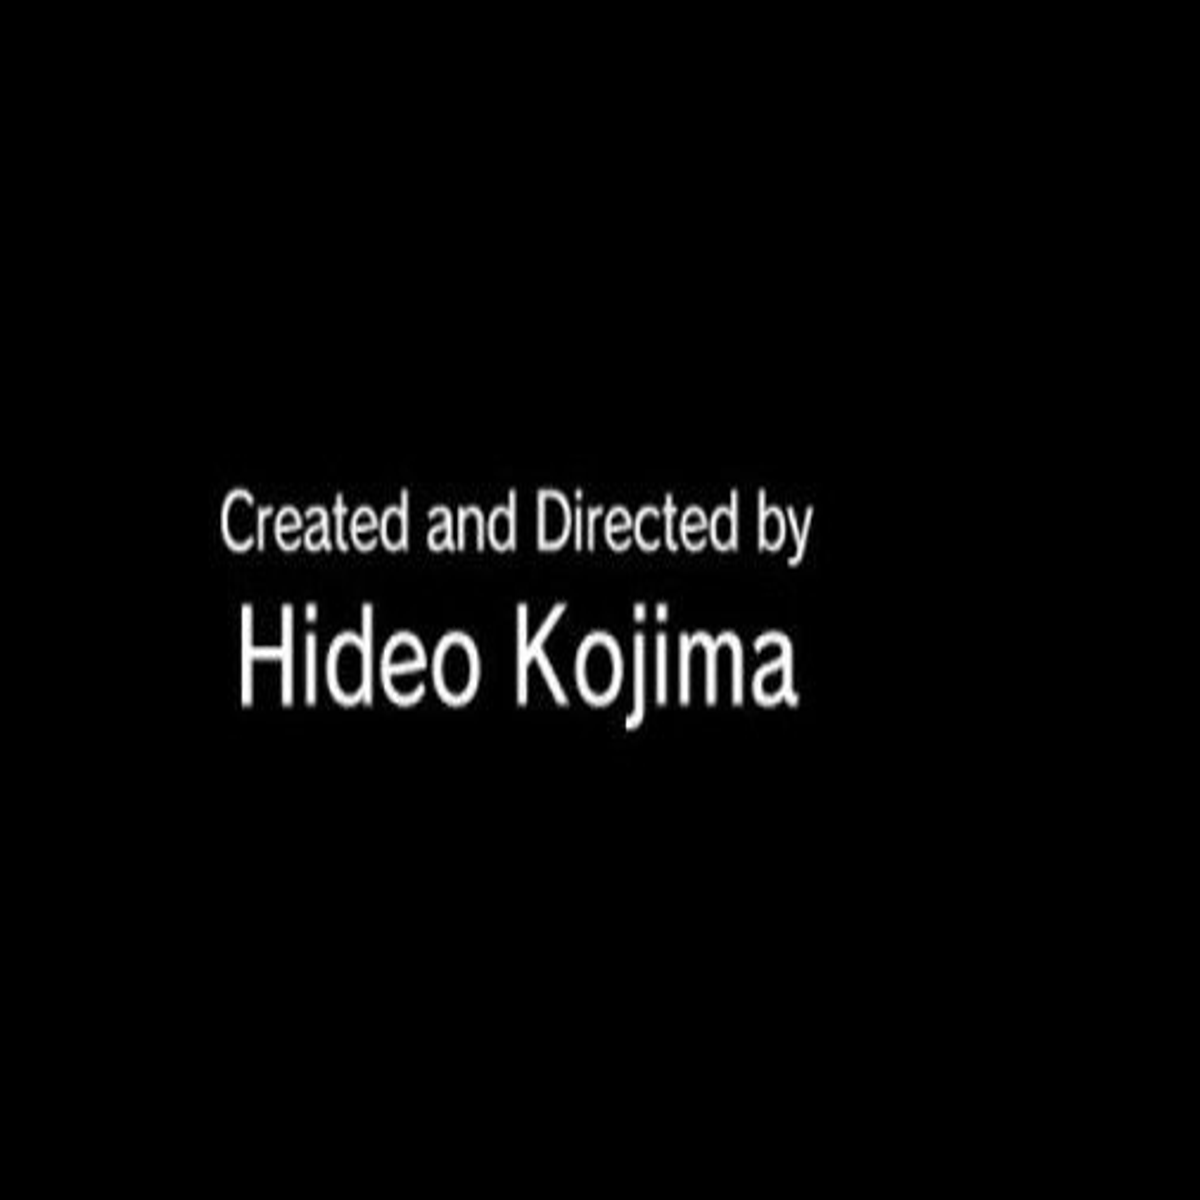 Hideo Kojima's Mission Unlocked